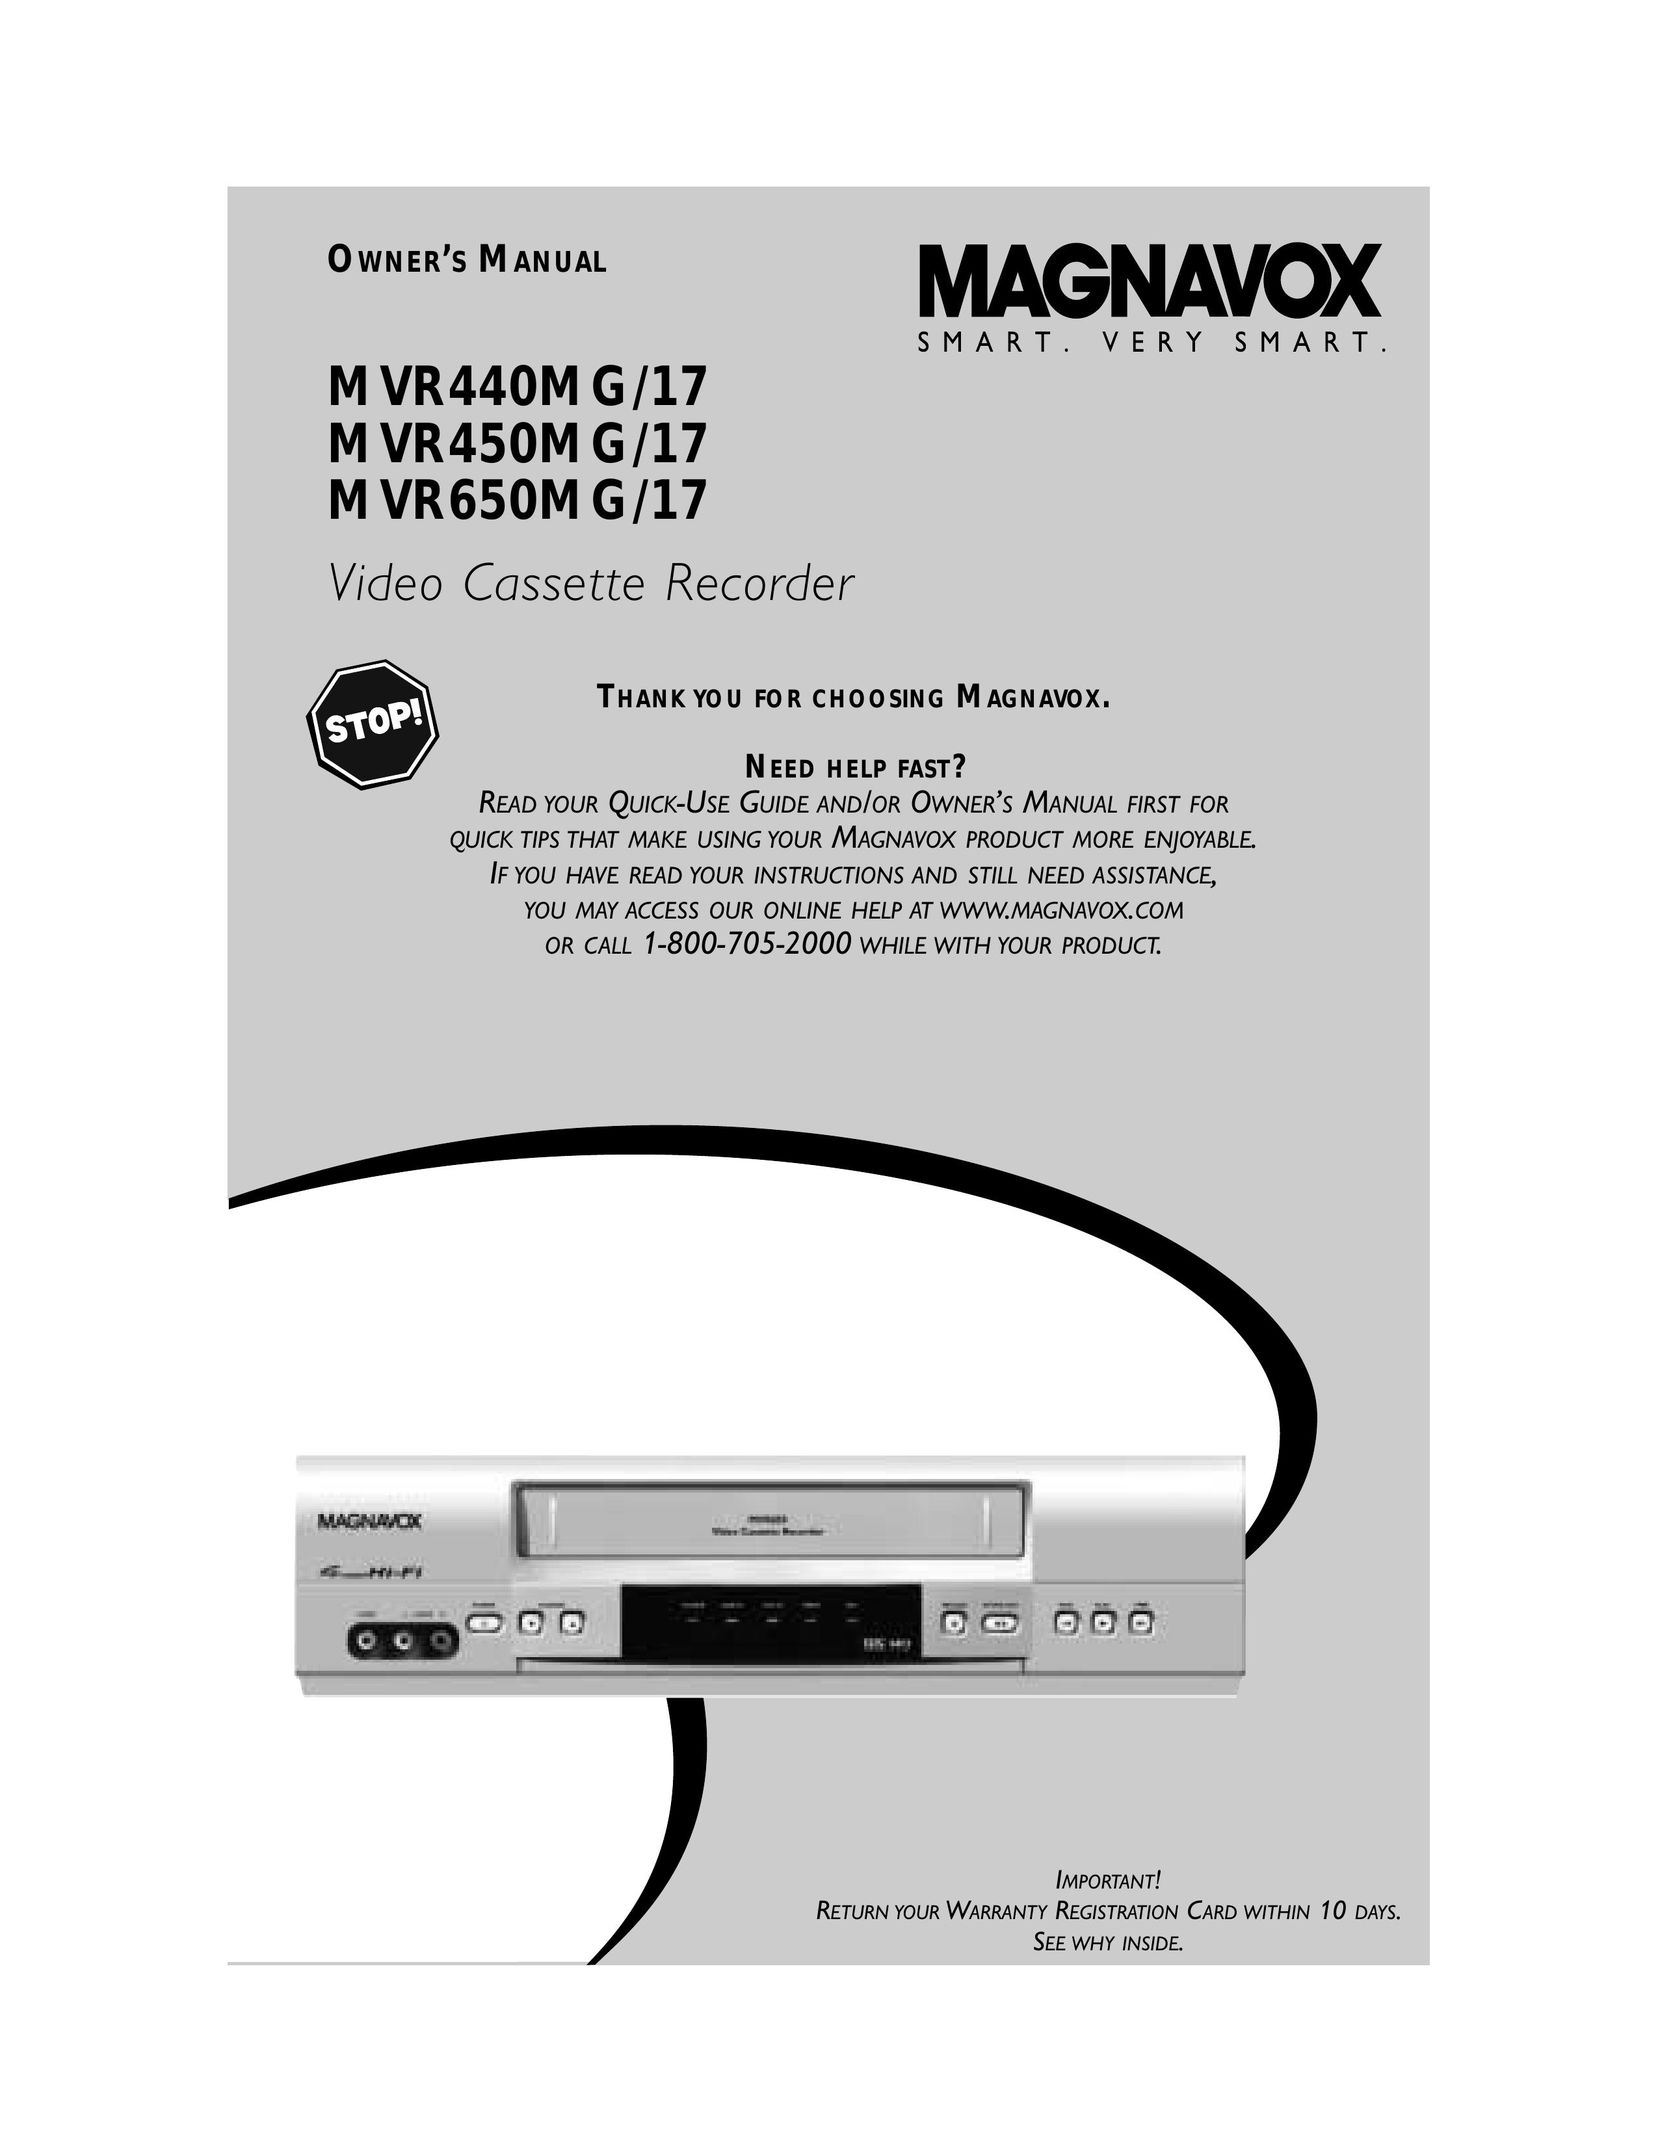 Magnavox MVR440MG/17 VCR User Manual